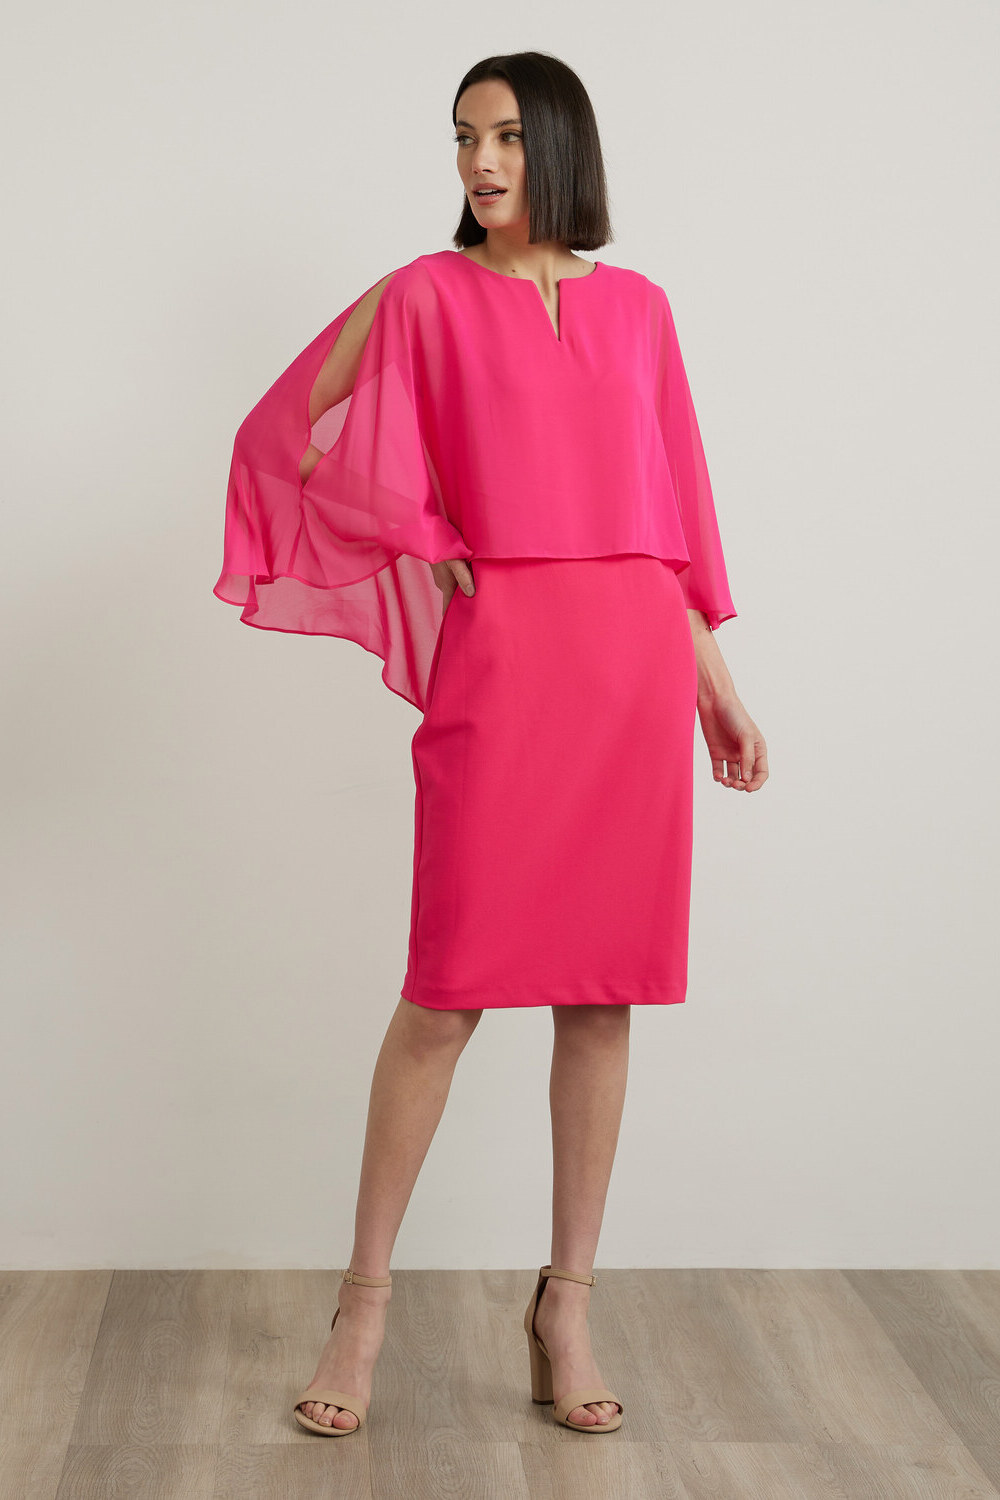 Joseph Ribkoff Chiffon Overlay Dress Style 212158. Azalea